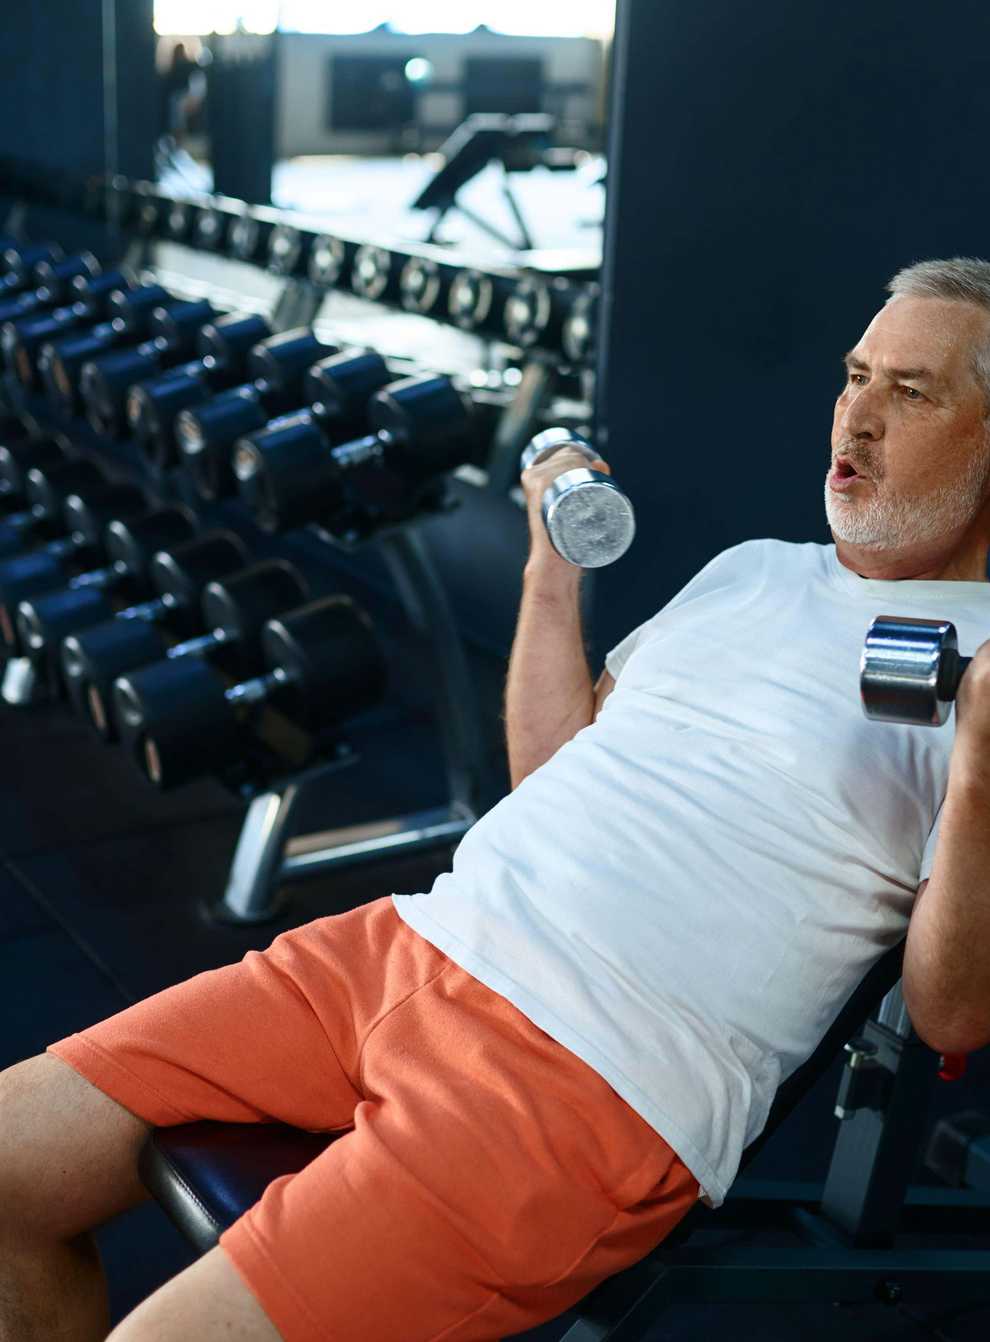 2H3MK2F Elderly man, workout with dumbbells on bench, gym